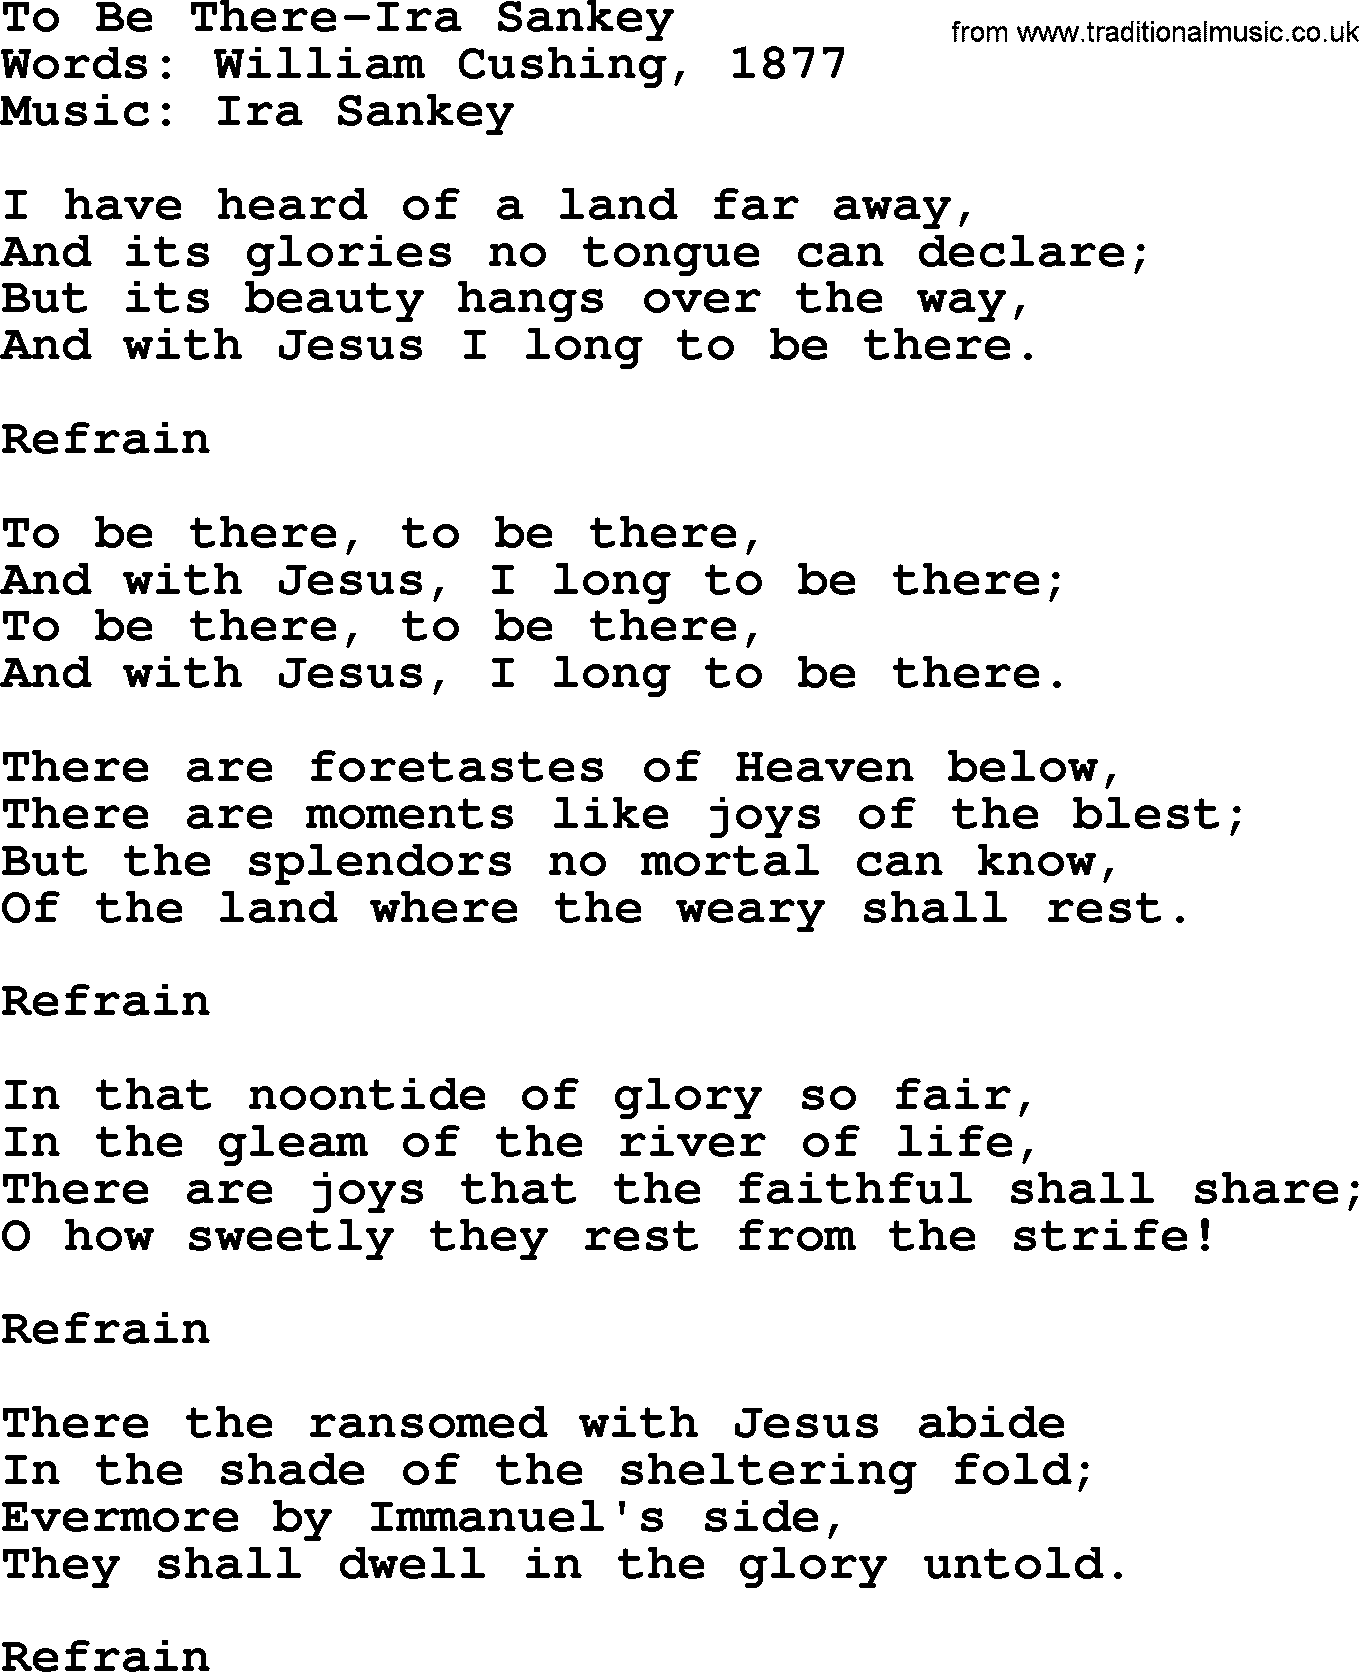 Ira Sankey hymn: To Be There-Ira Sankey, lyrics